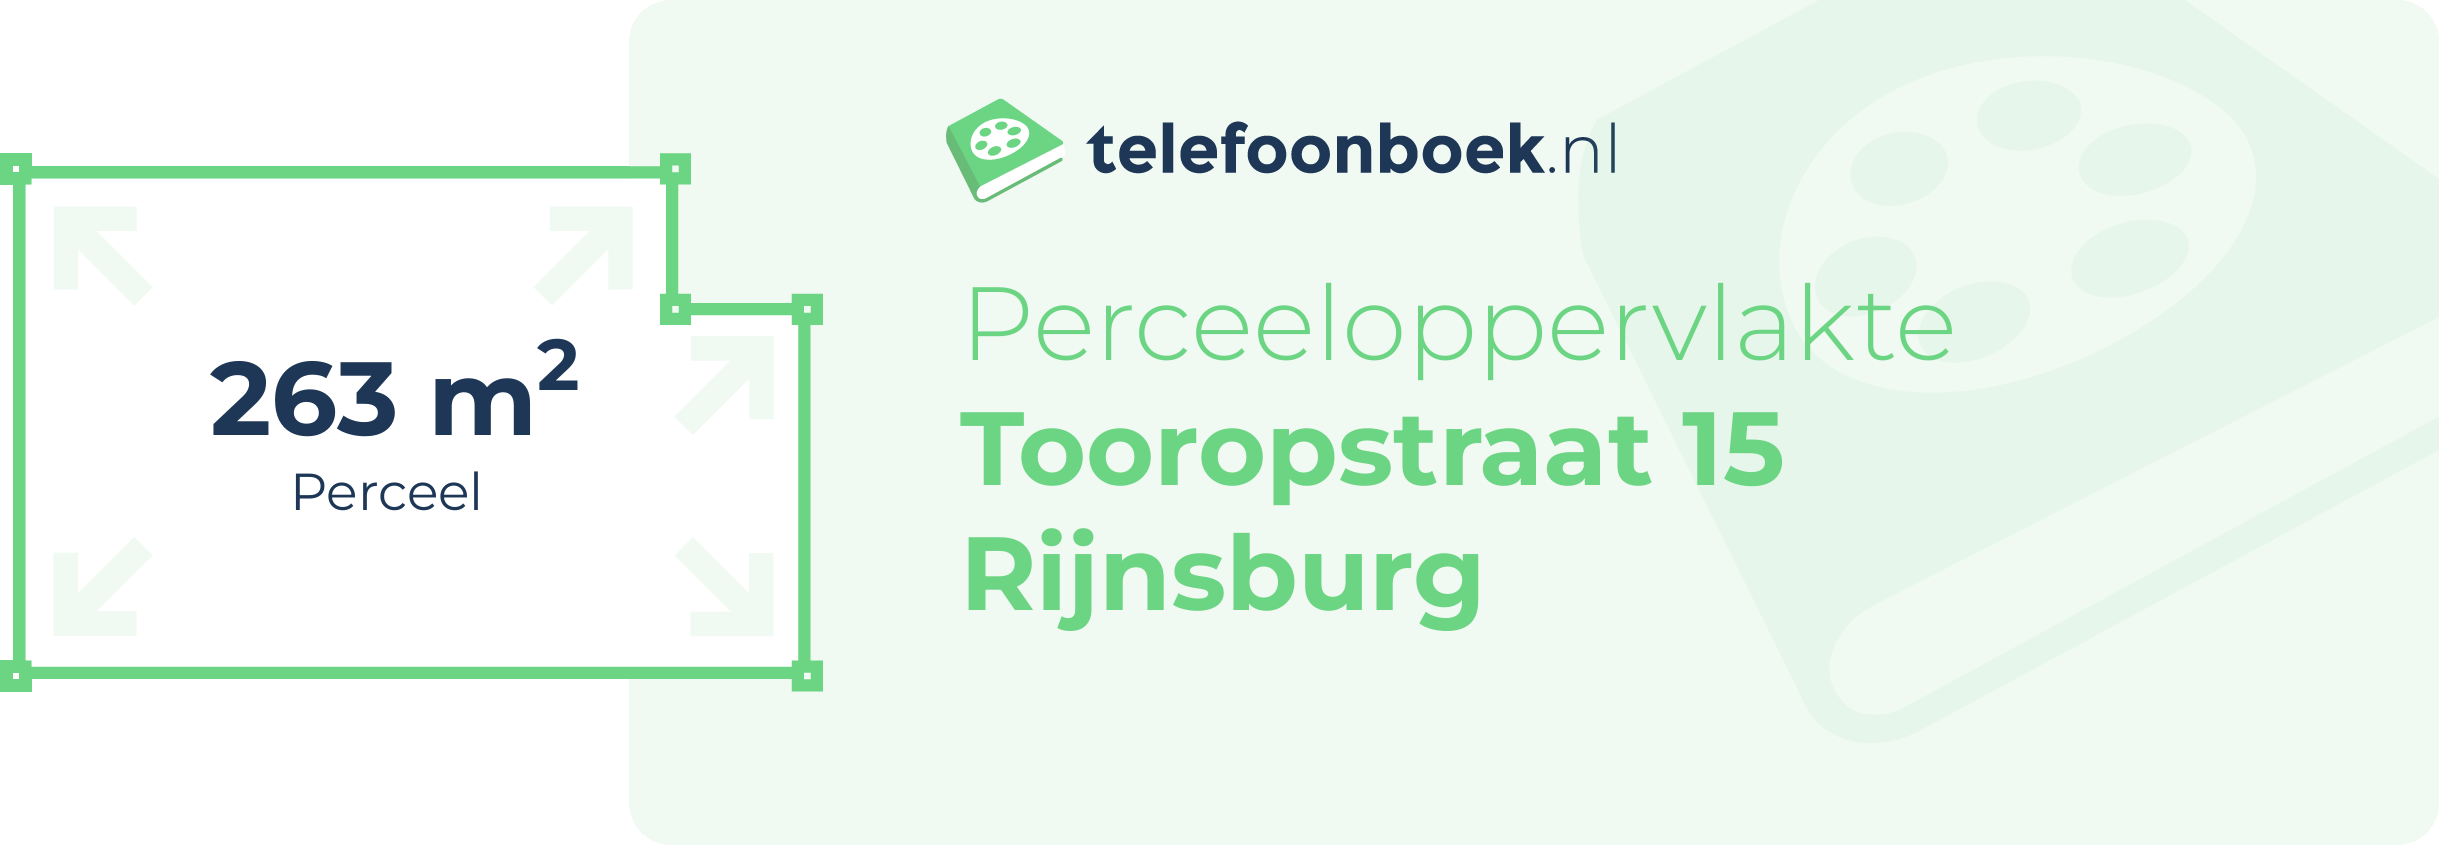 Perceeloppervlakte Tooropstraat 15 Rijnsburg